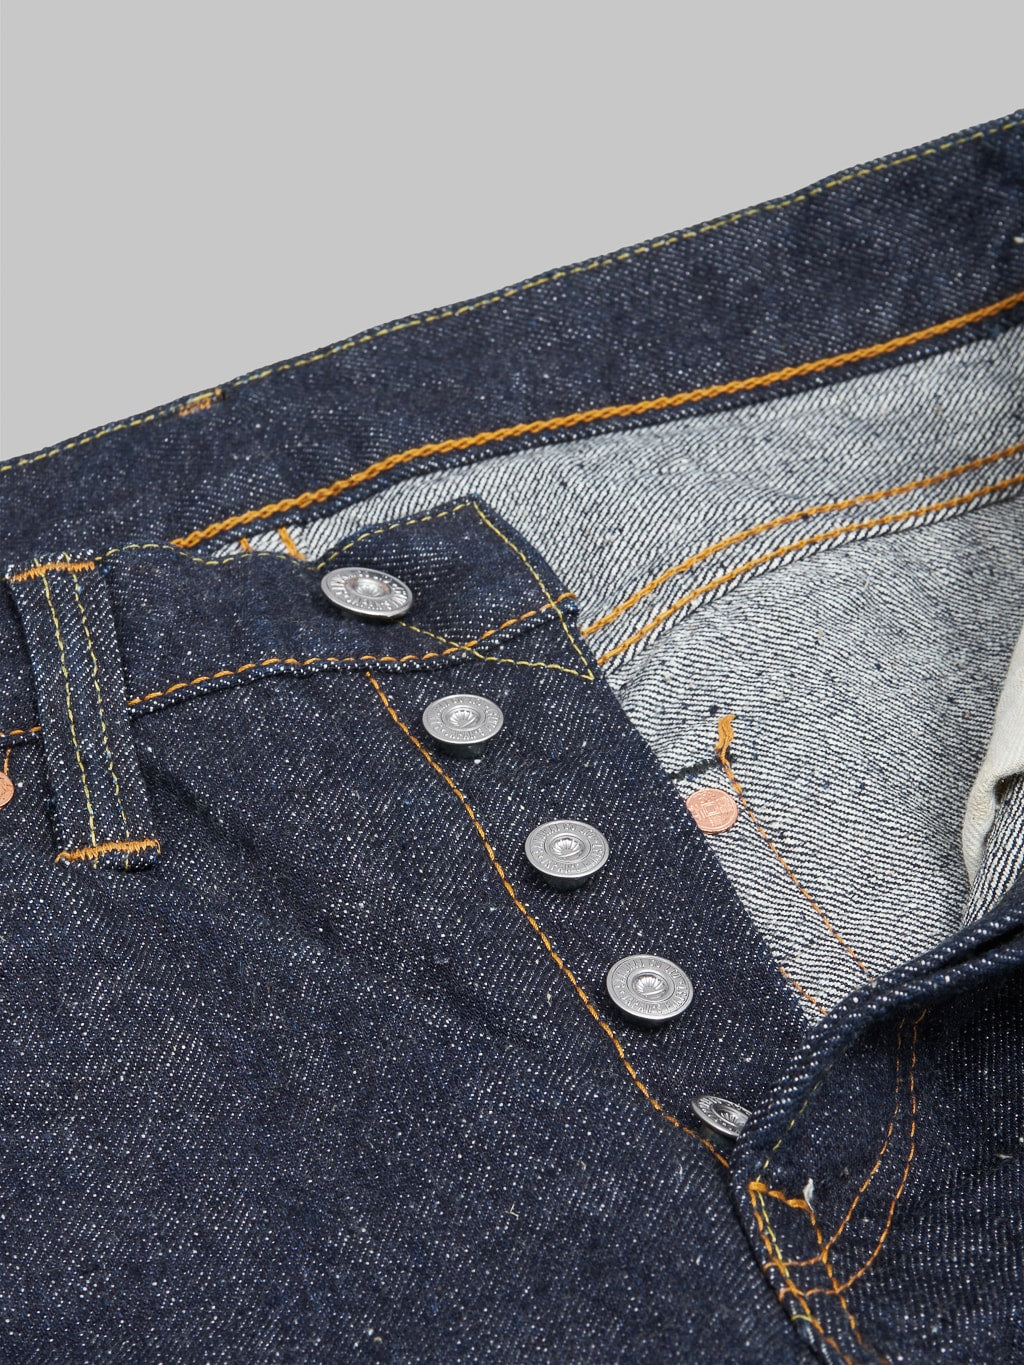 samurai s0511xxii texas cotton slim tapered jeans iron buttons